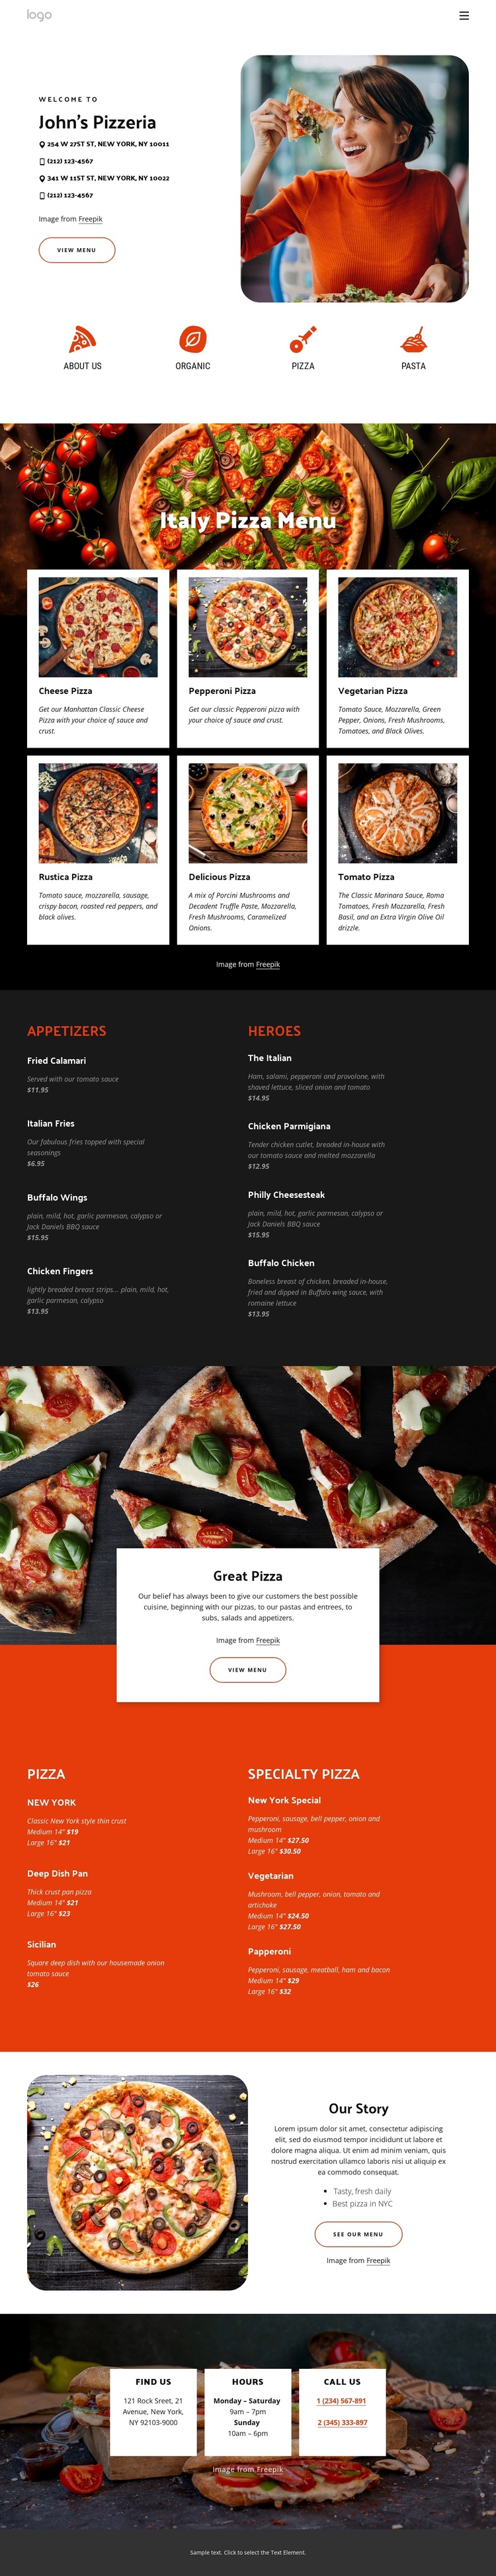 Pizzeria Website Builder Software